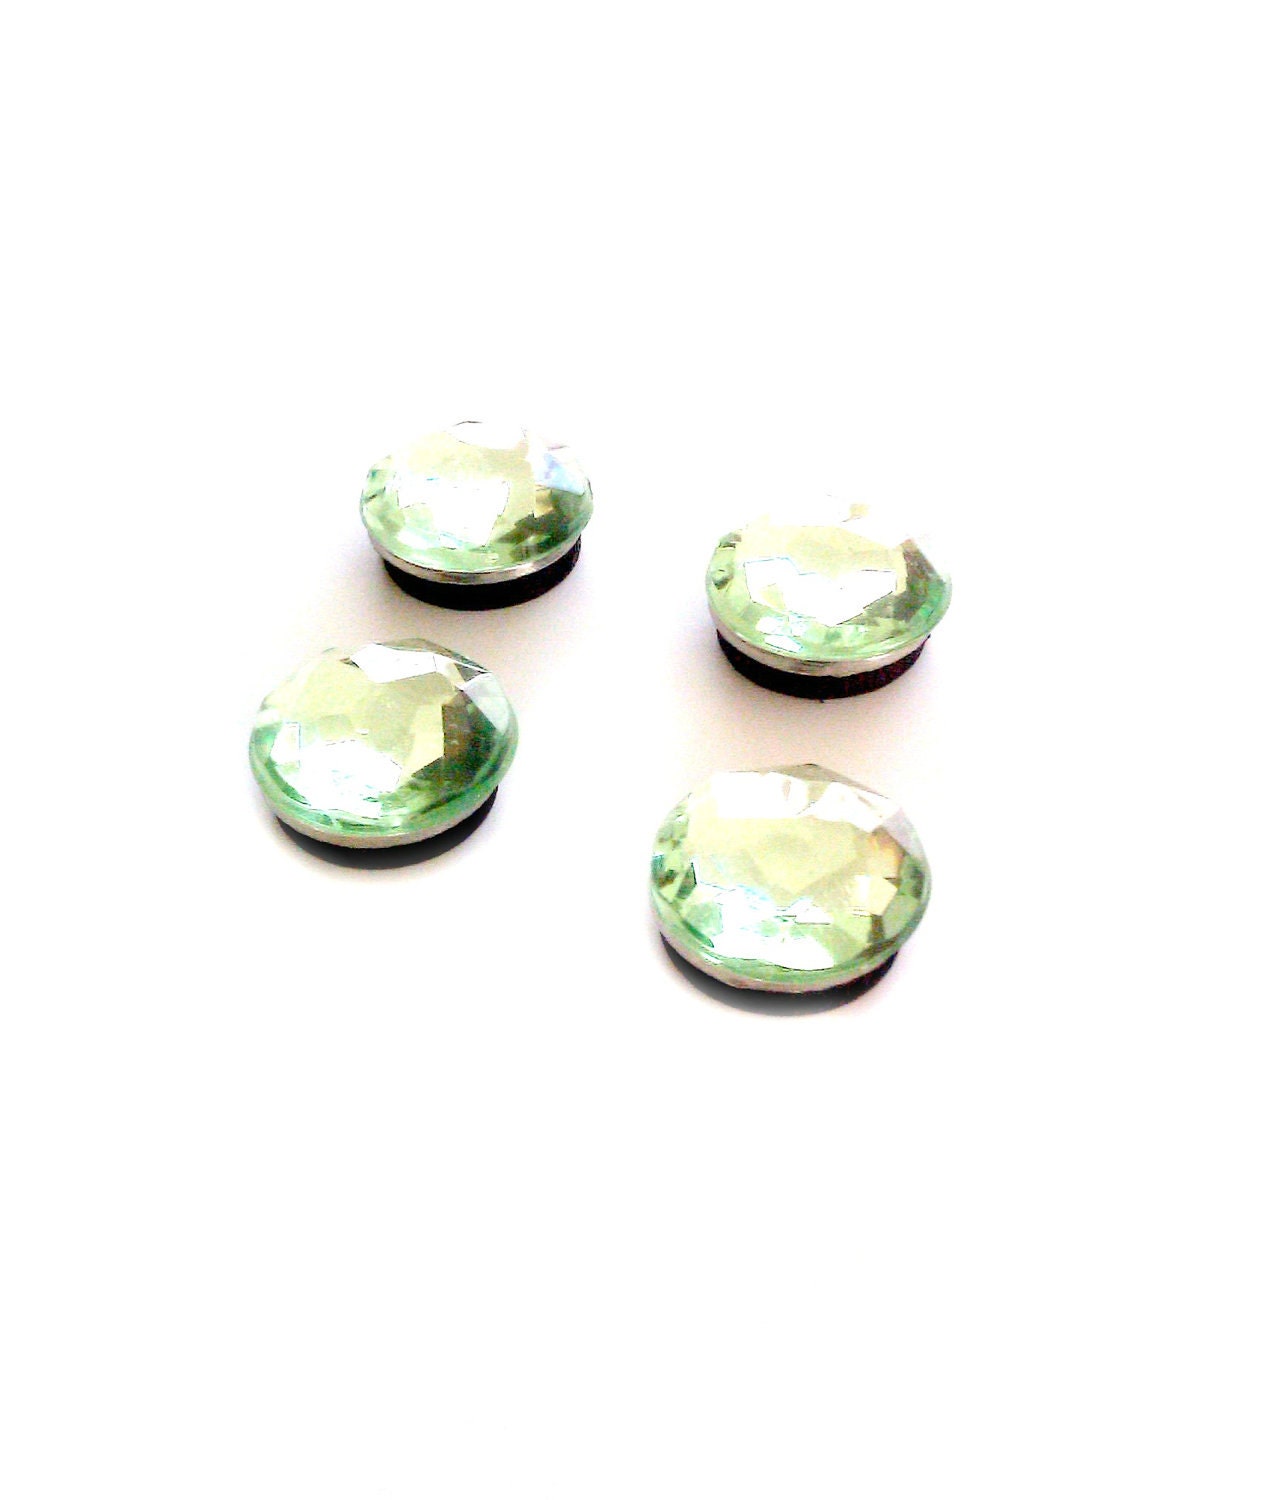 Green Bling Magnets (Set of 4) - Decorative Refrigerator Magnets